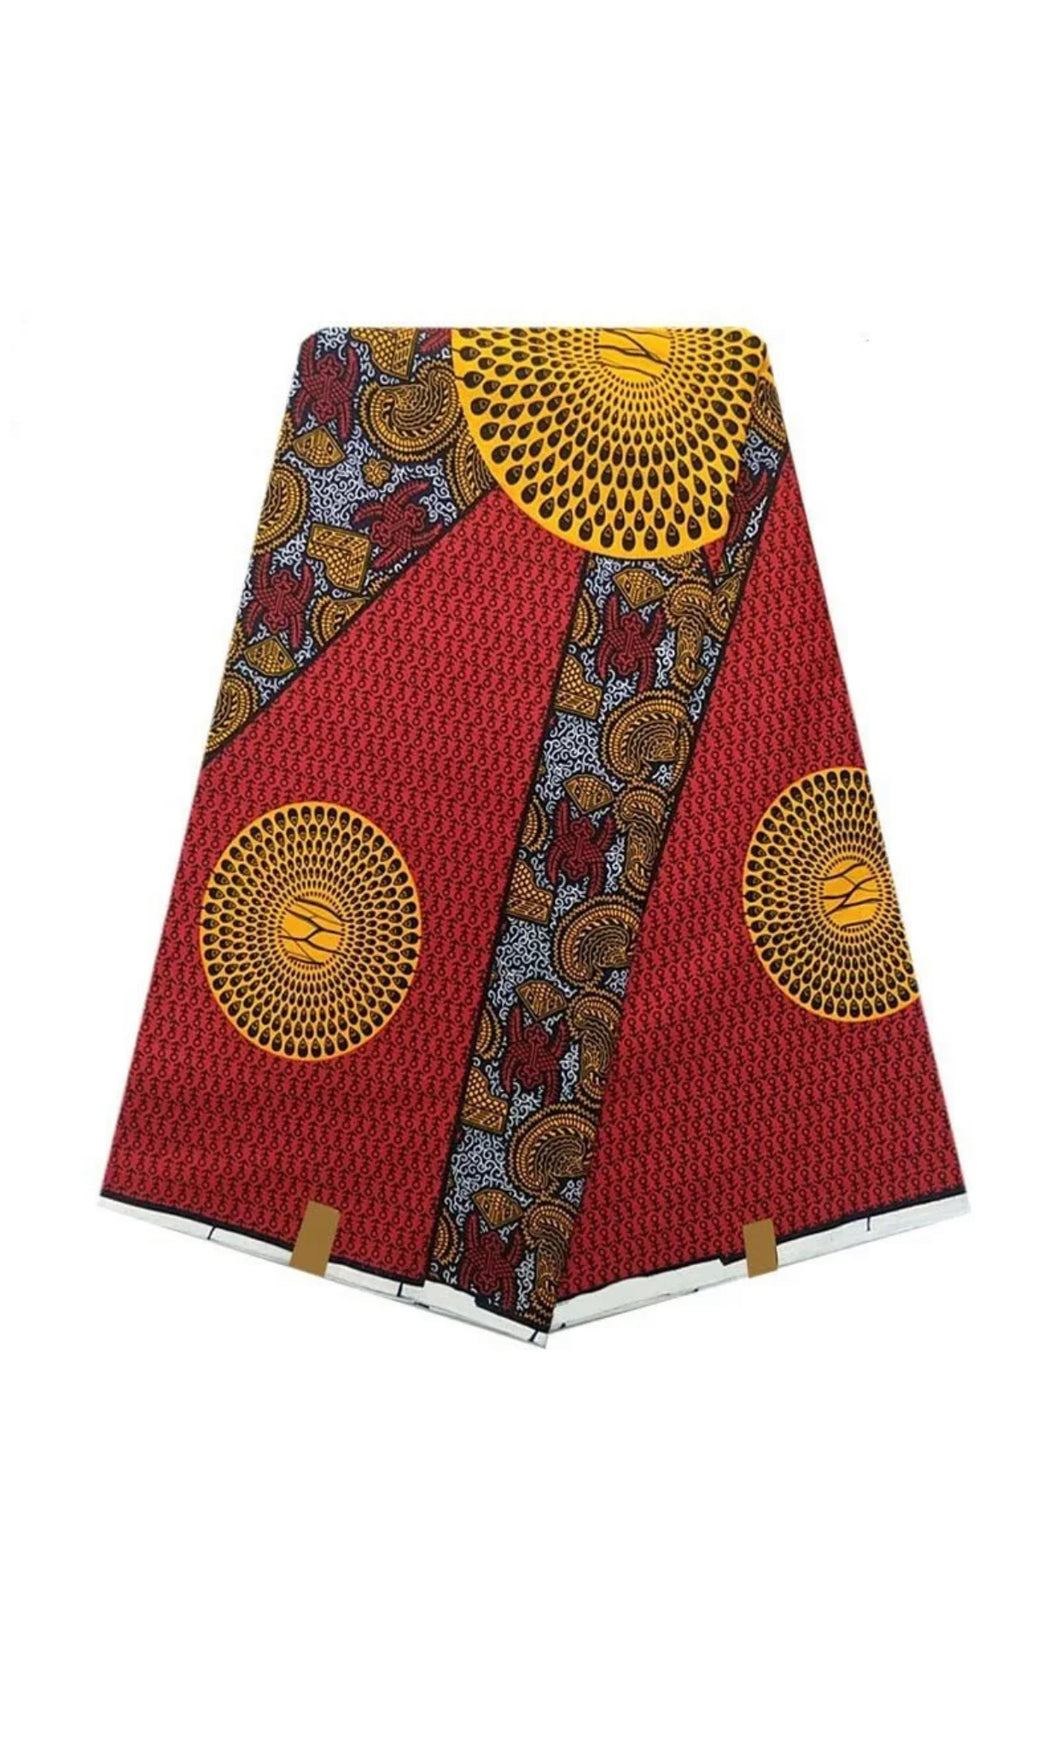 African Ankara fabric